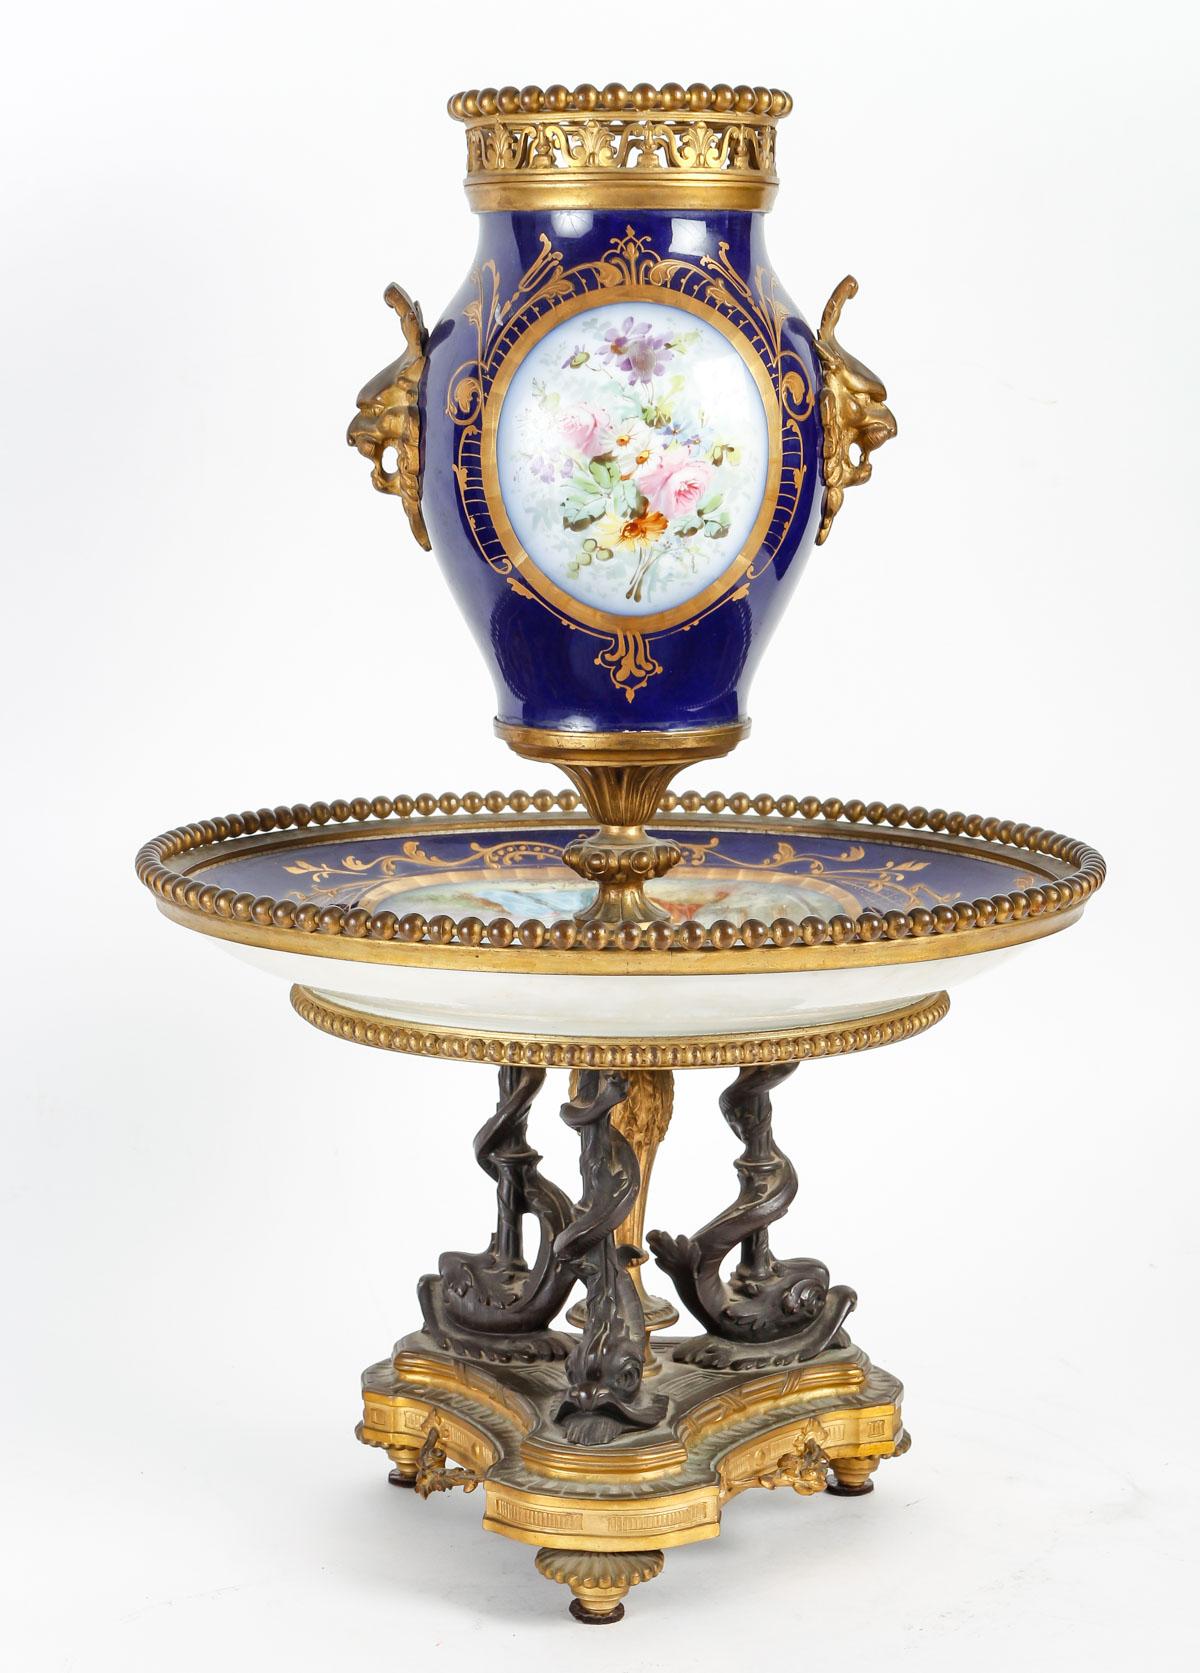 Napoleon III A 19th Century French Napoléon III Sèvres Porcelain Surtout de Table